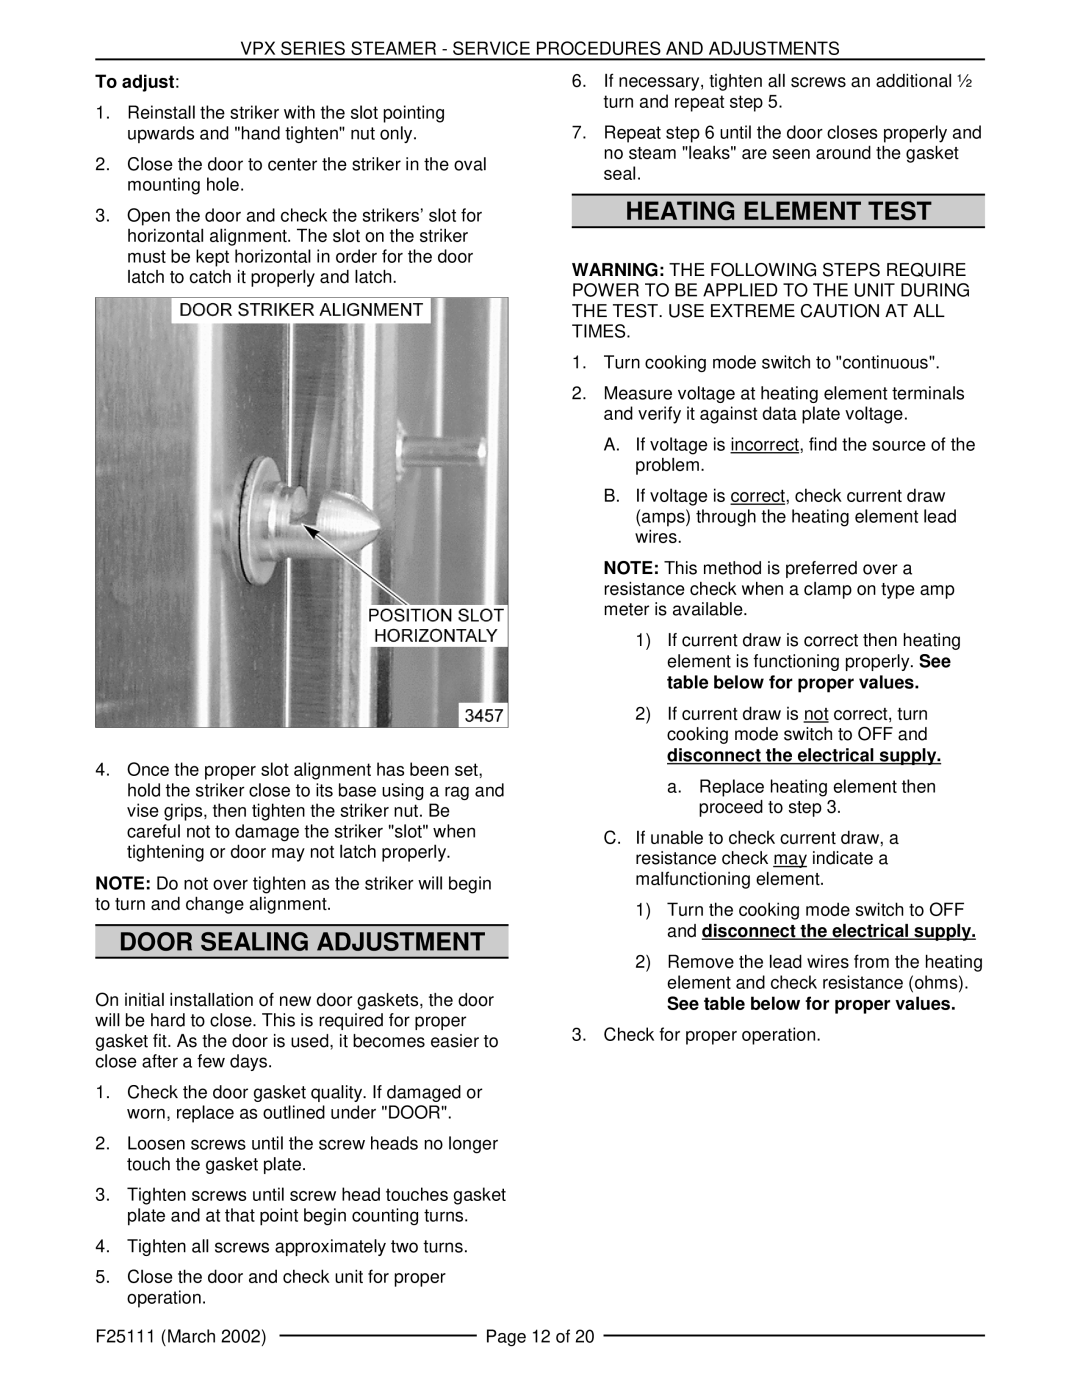 Vulcan-Hart VPX3 126586 manual Door Sealing Adjustment, Heating Element Test, To adjust, See table below for proper values 